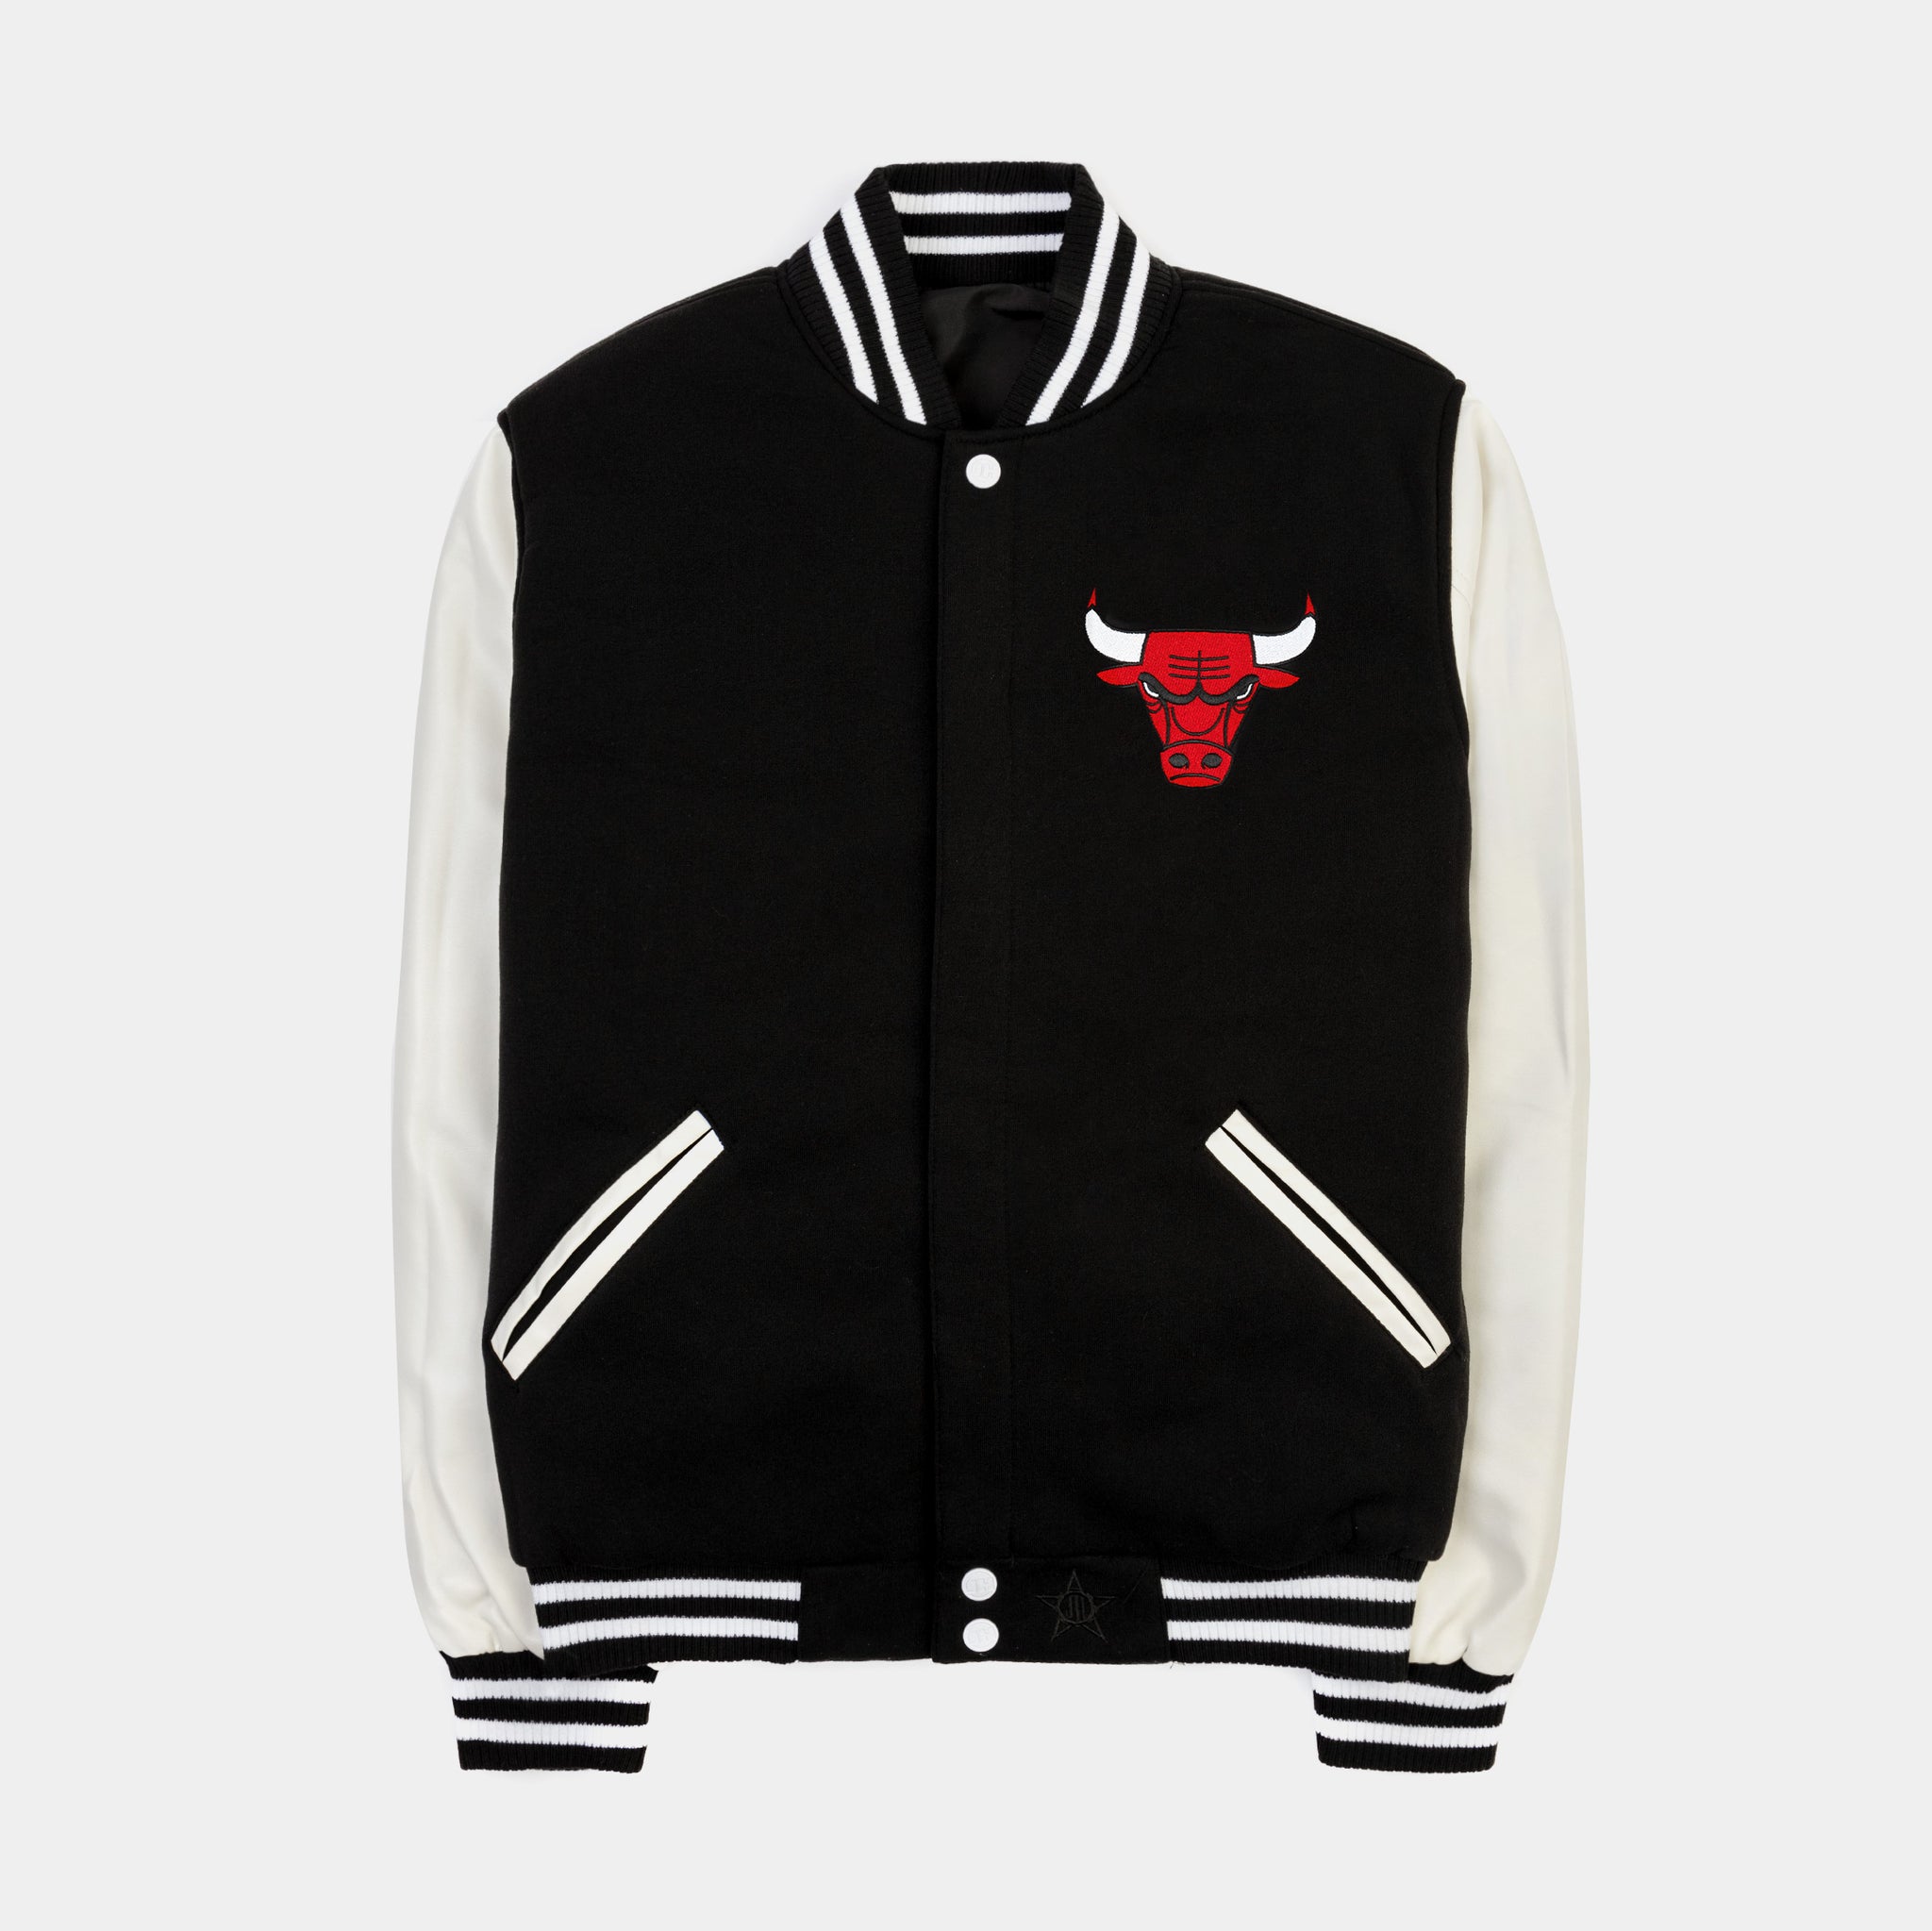 30% OFF The Best Men's Chicago Bulls Leather Jacket For Sale – 4 Fan Shop